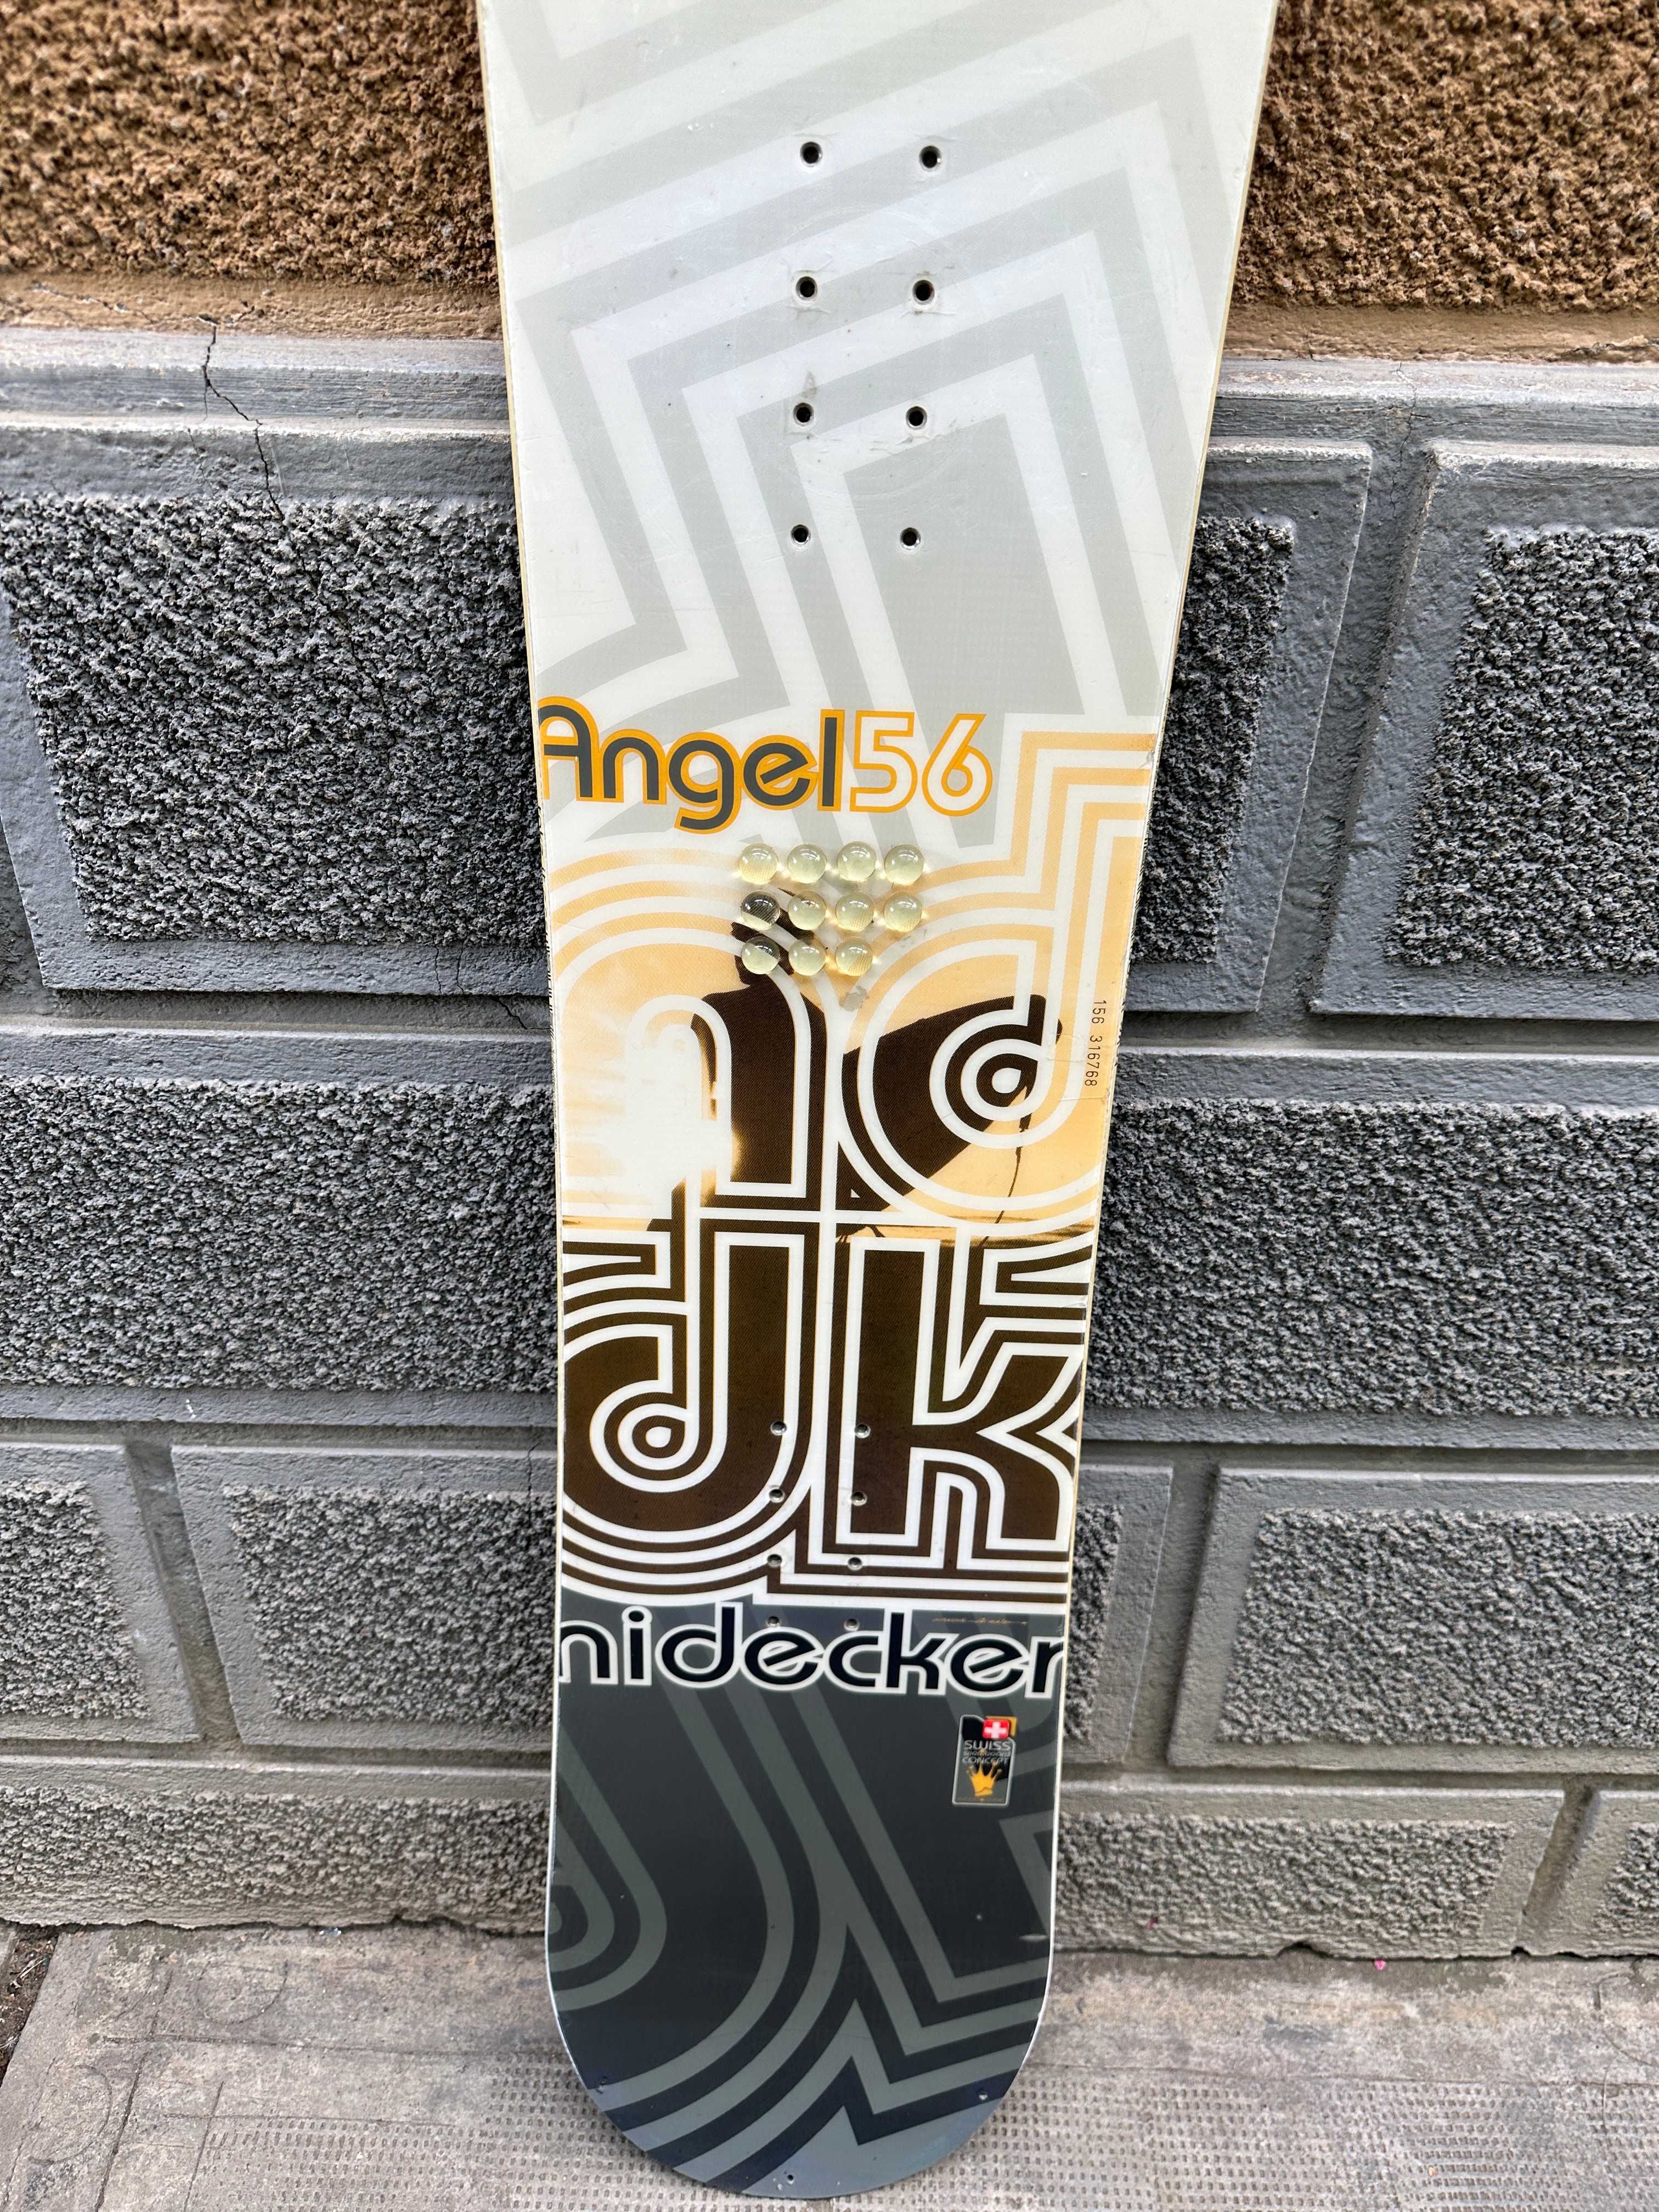 placa snowboard nidecker angel L156cm